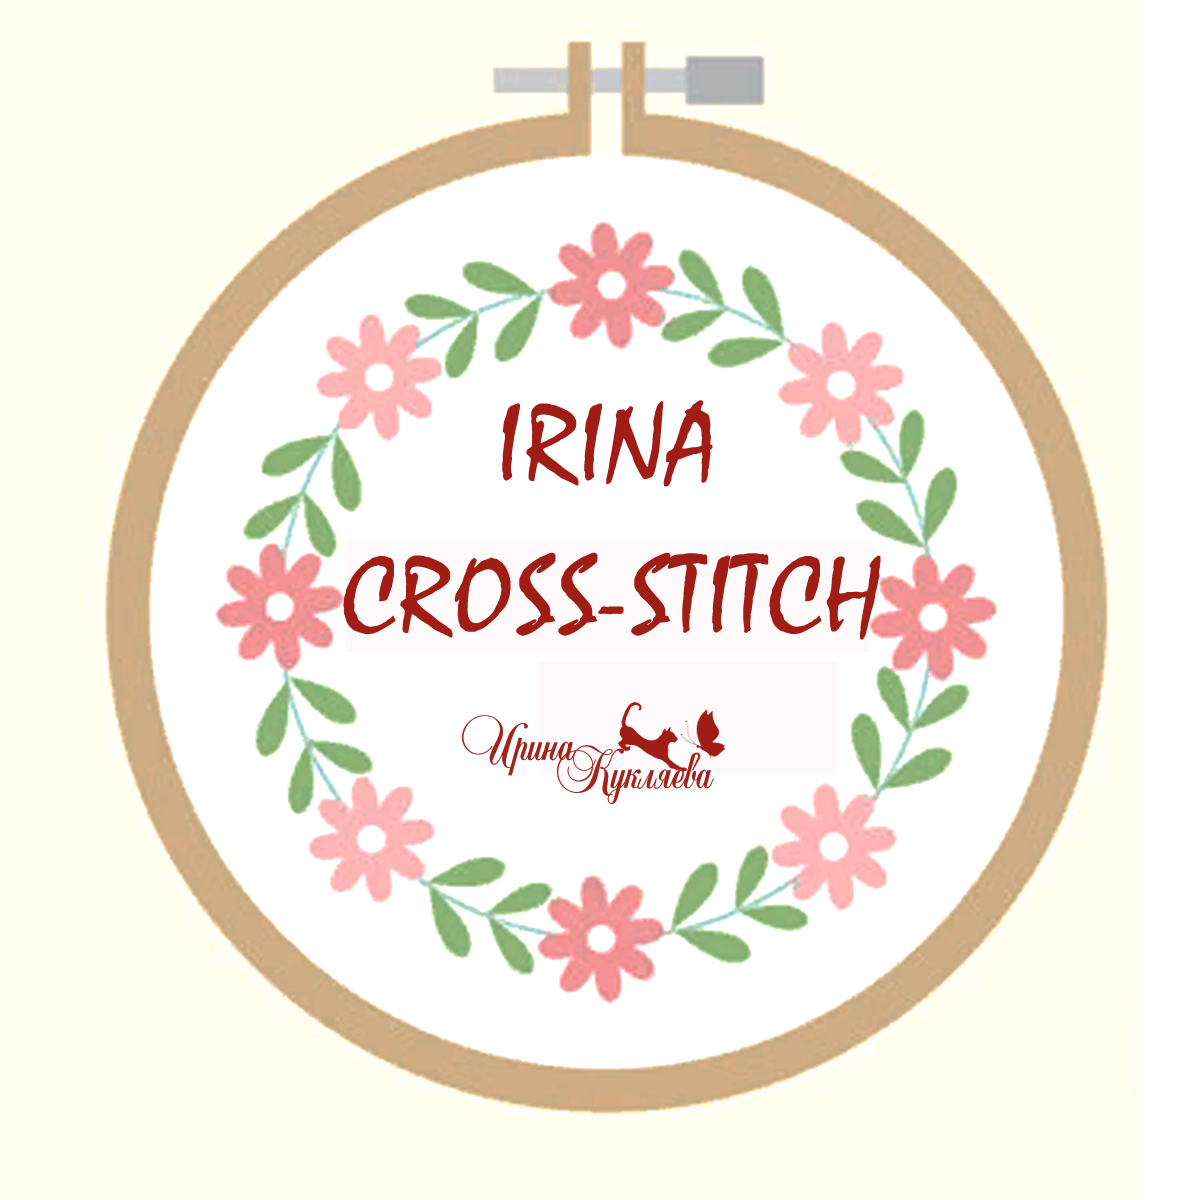 Irina Cross Stitch. Схемы хороших вышивок.